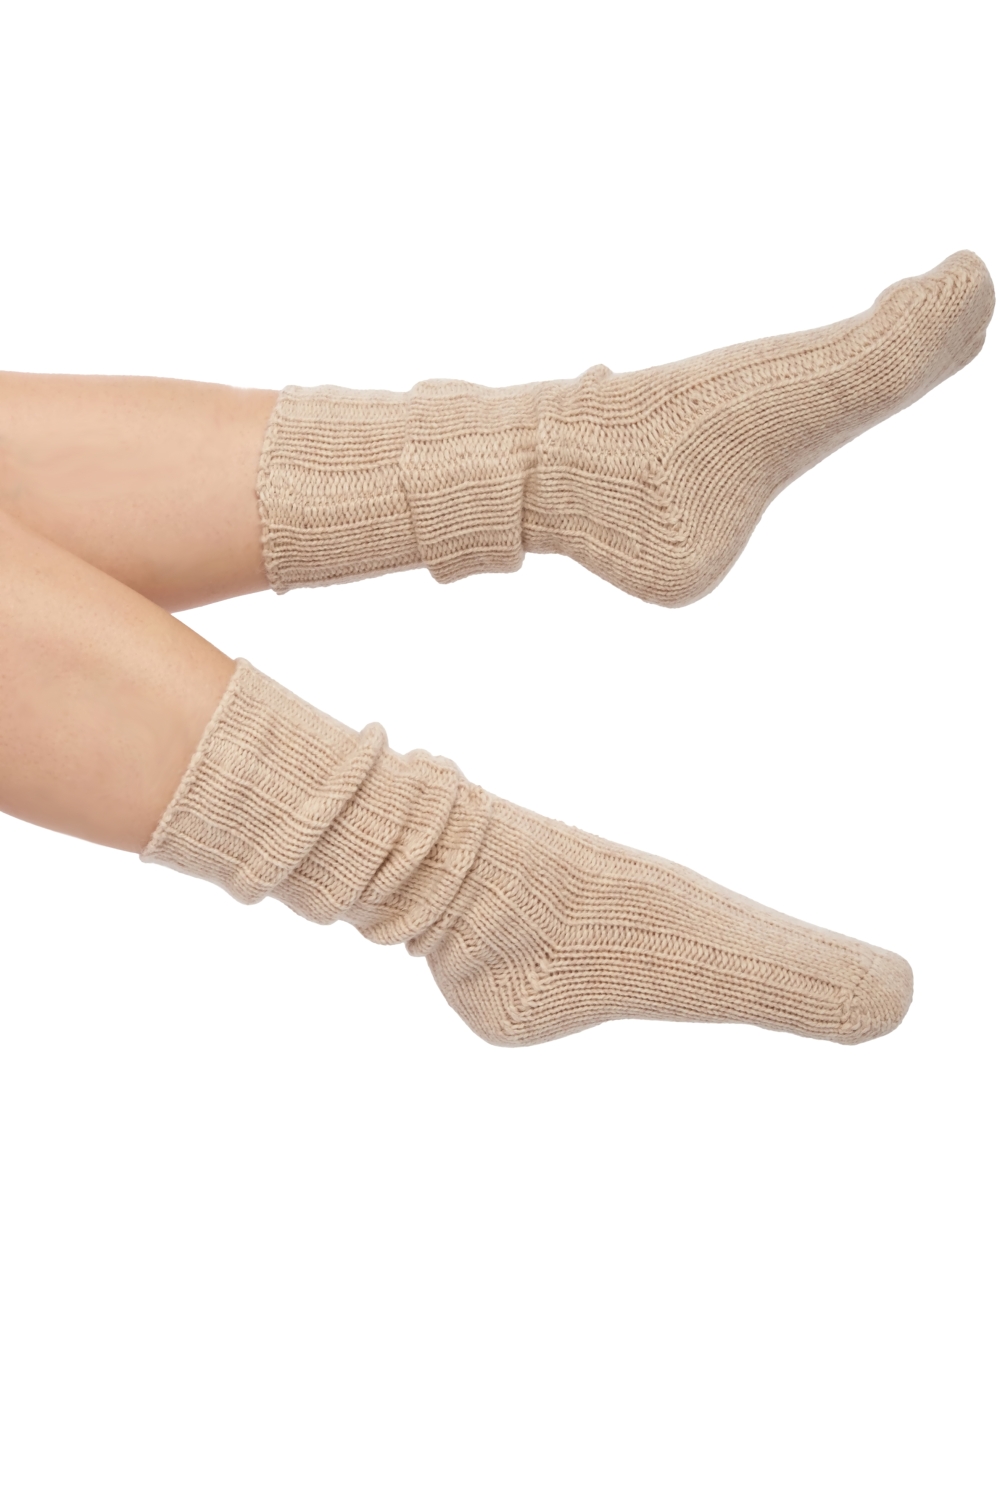 Camel accessories socks vilnius nature one size